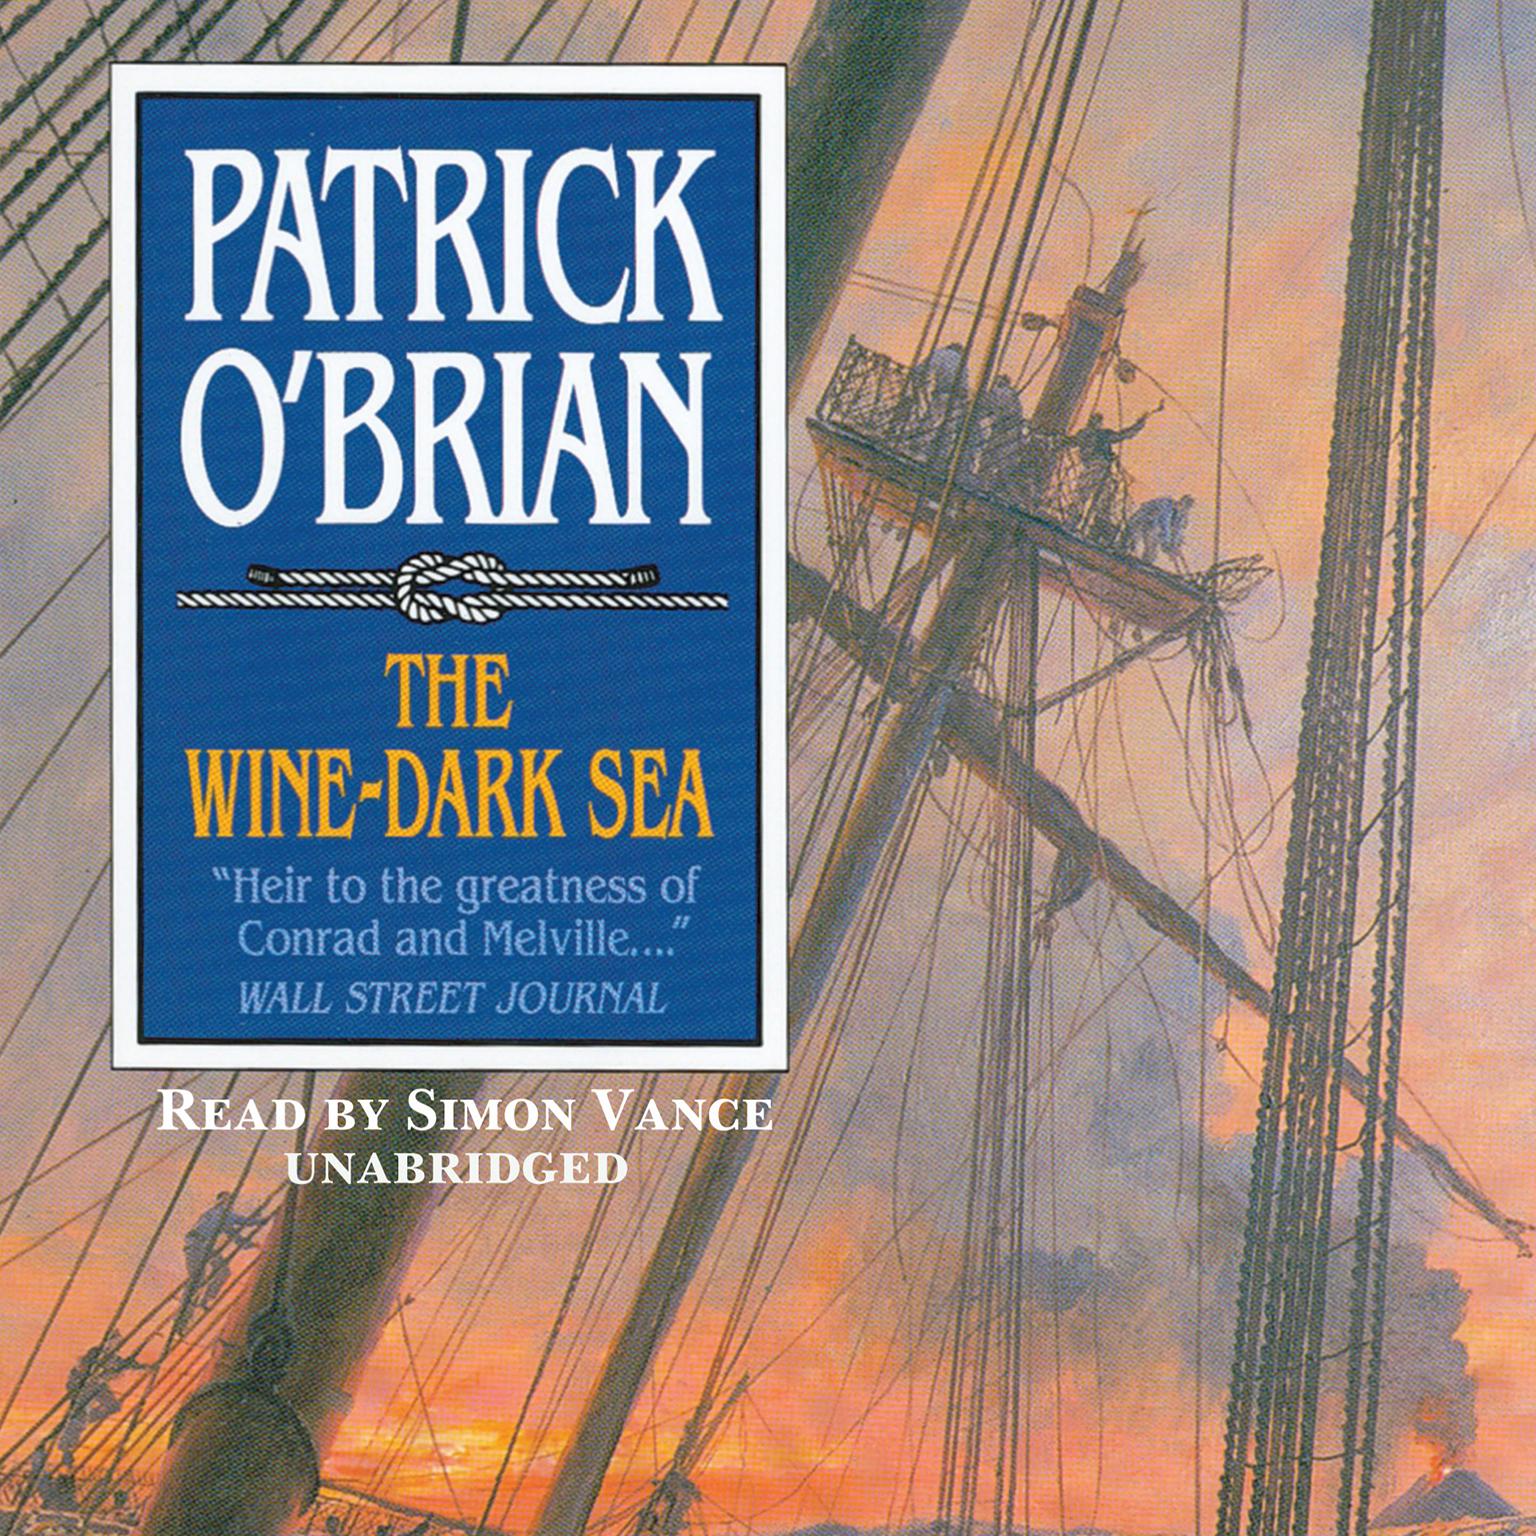 The Wine-Dark Sea Audiobook, by Patrick O'Brian